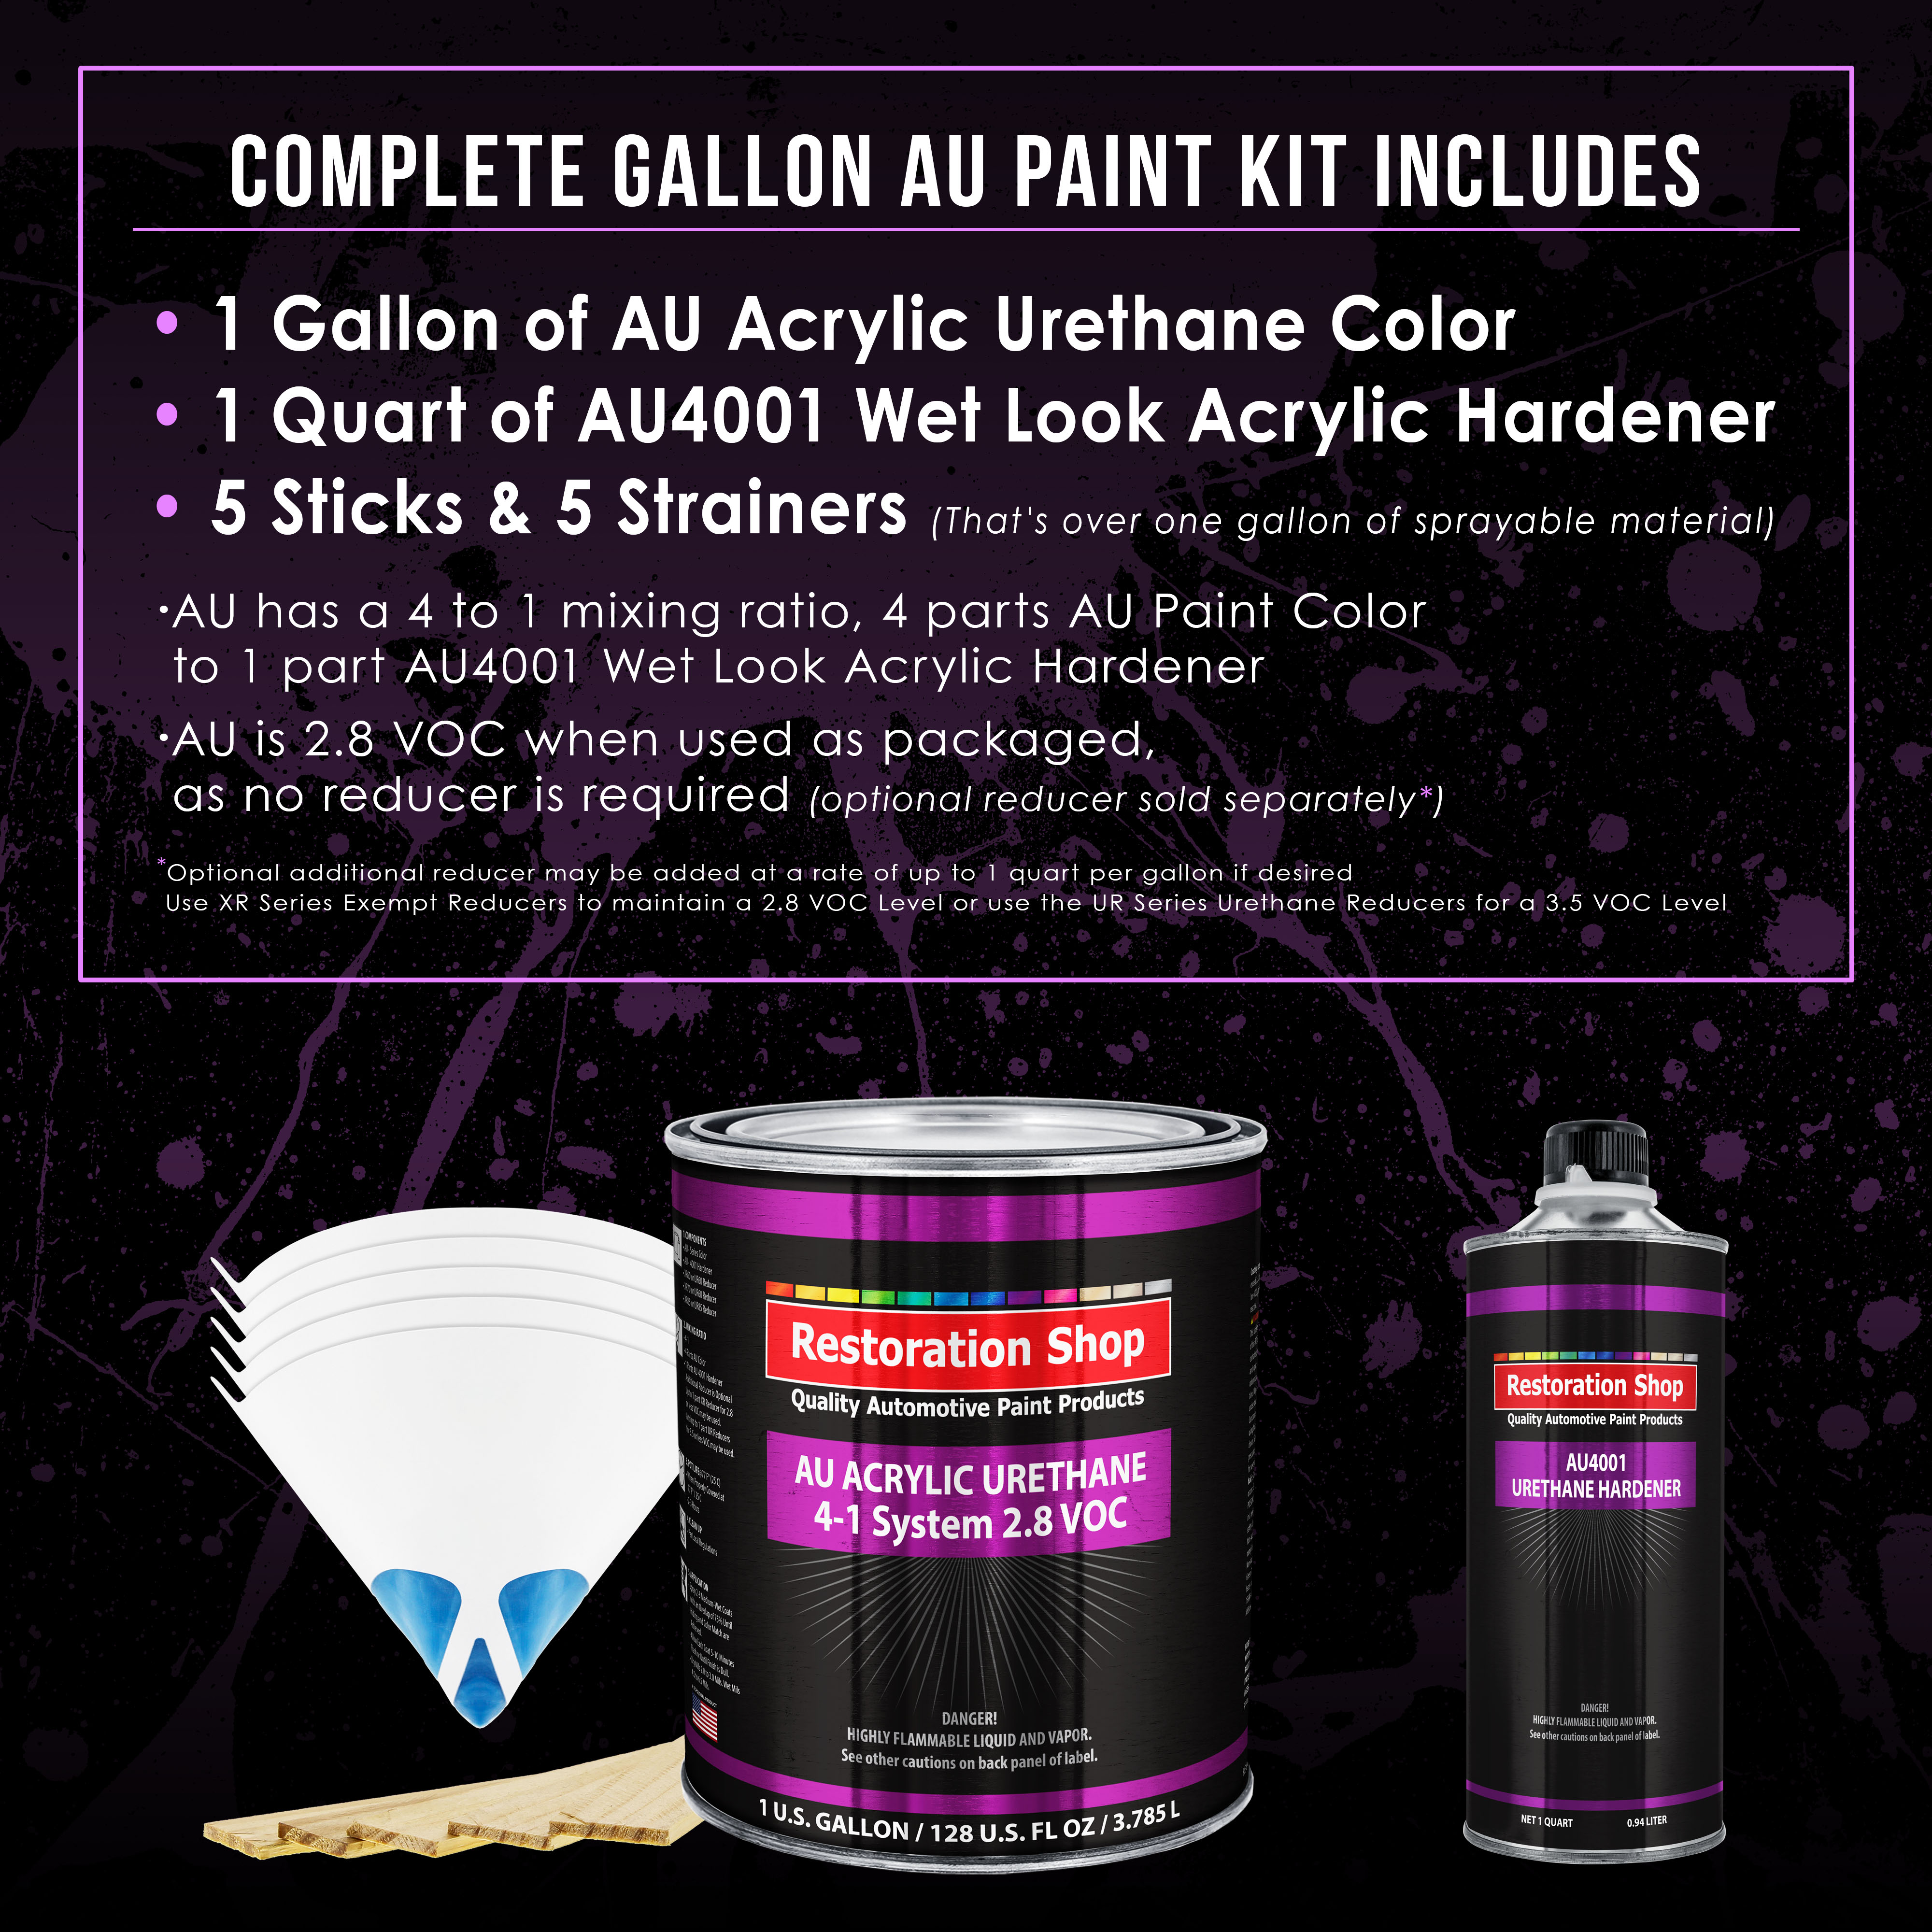 Restoration Shop Black Diamond Firemist Acrylic Urethane Auto Paint Complete Gallon Paint Kit, Single Stage High Gloss - image 2 of 5